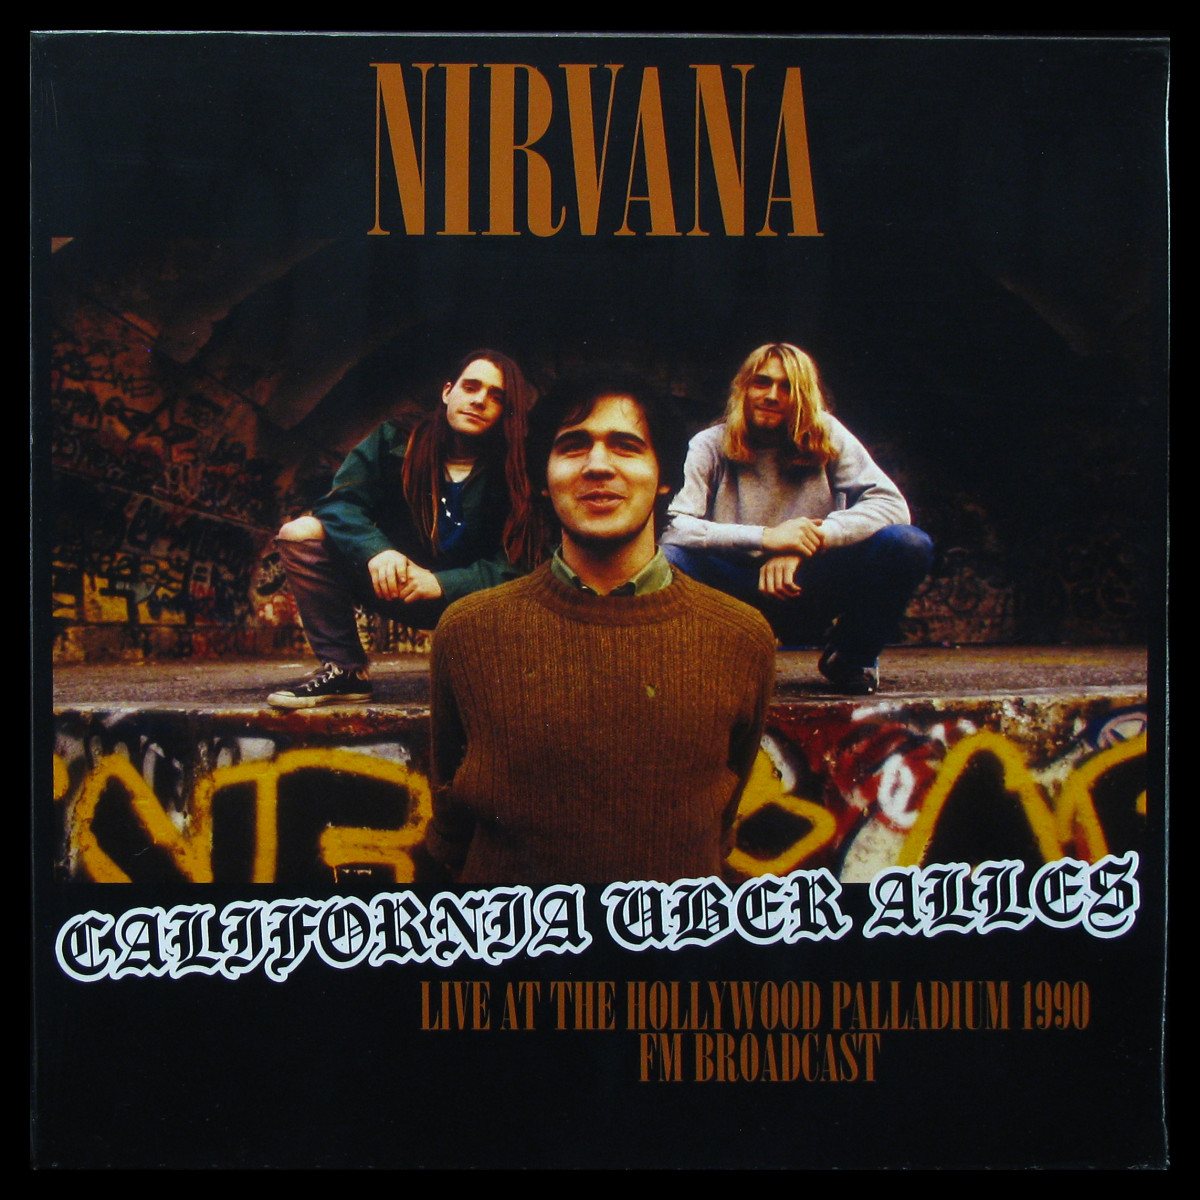 LP Nirvana — California Uber Alles (Live At The Hollywood Palladium 1990 FM Broadcast) фото